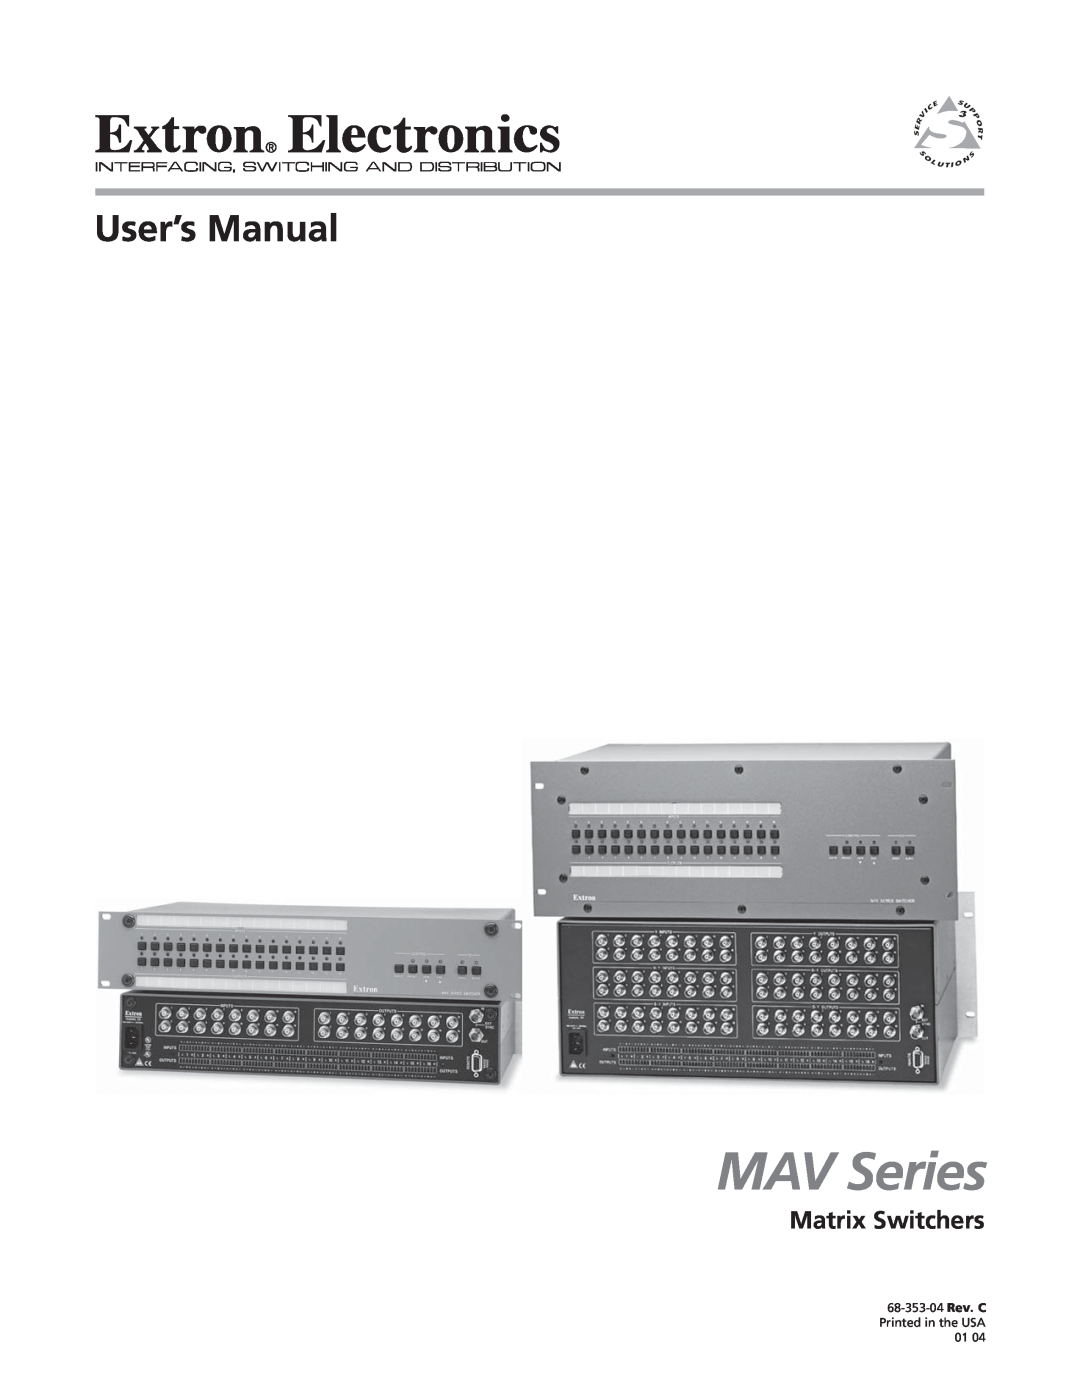 Extron electronic setup guide Large Scale Matrix Switchers, MAV Plus Series, CrossPoint 450 Plus Series, Setup Guide 